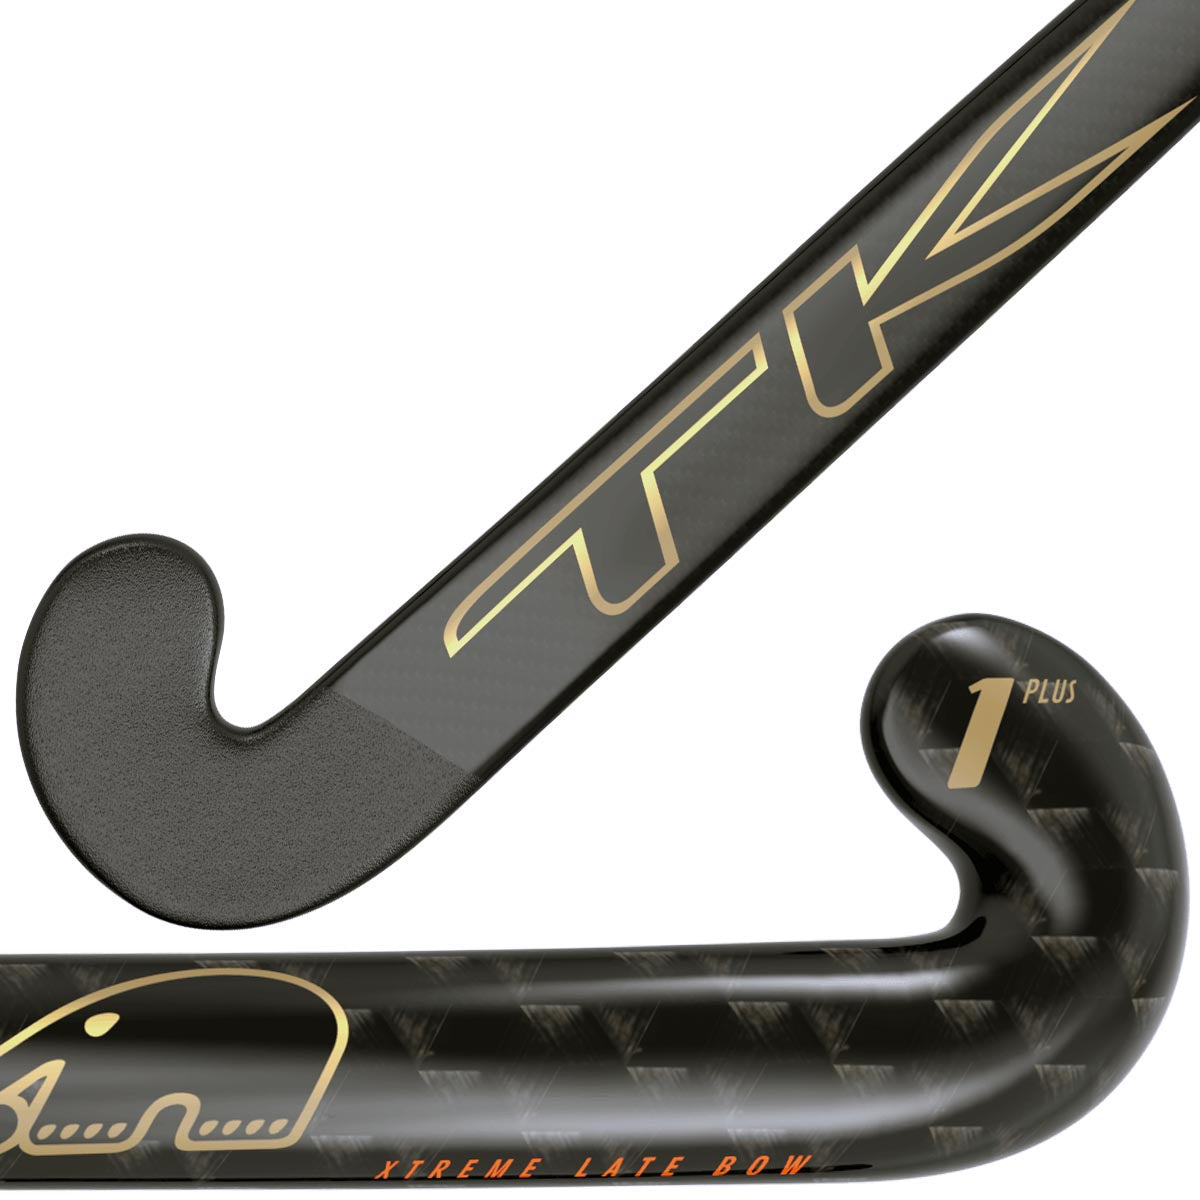 TK 1 Plus Xtreme Late Bow Field Hockey – Hit the Net Sports